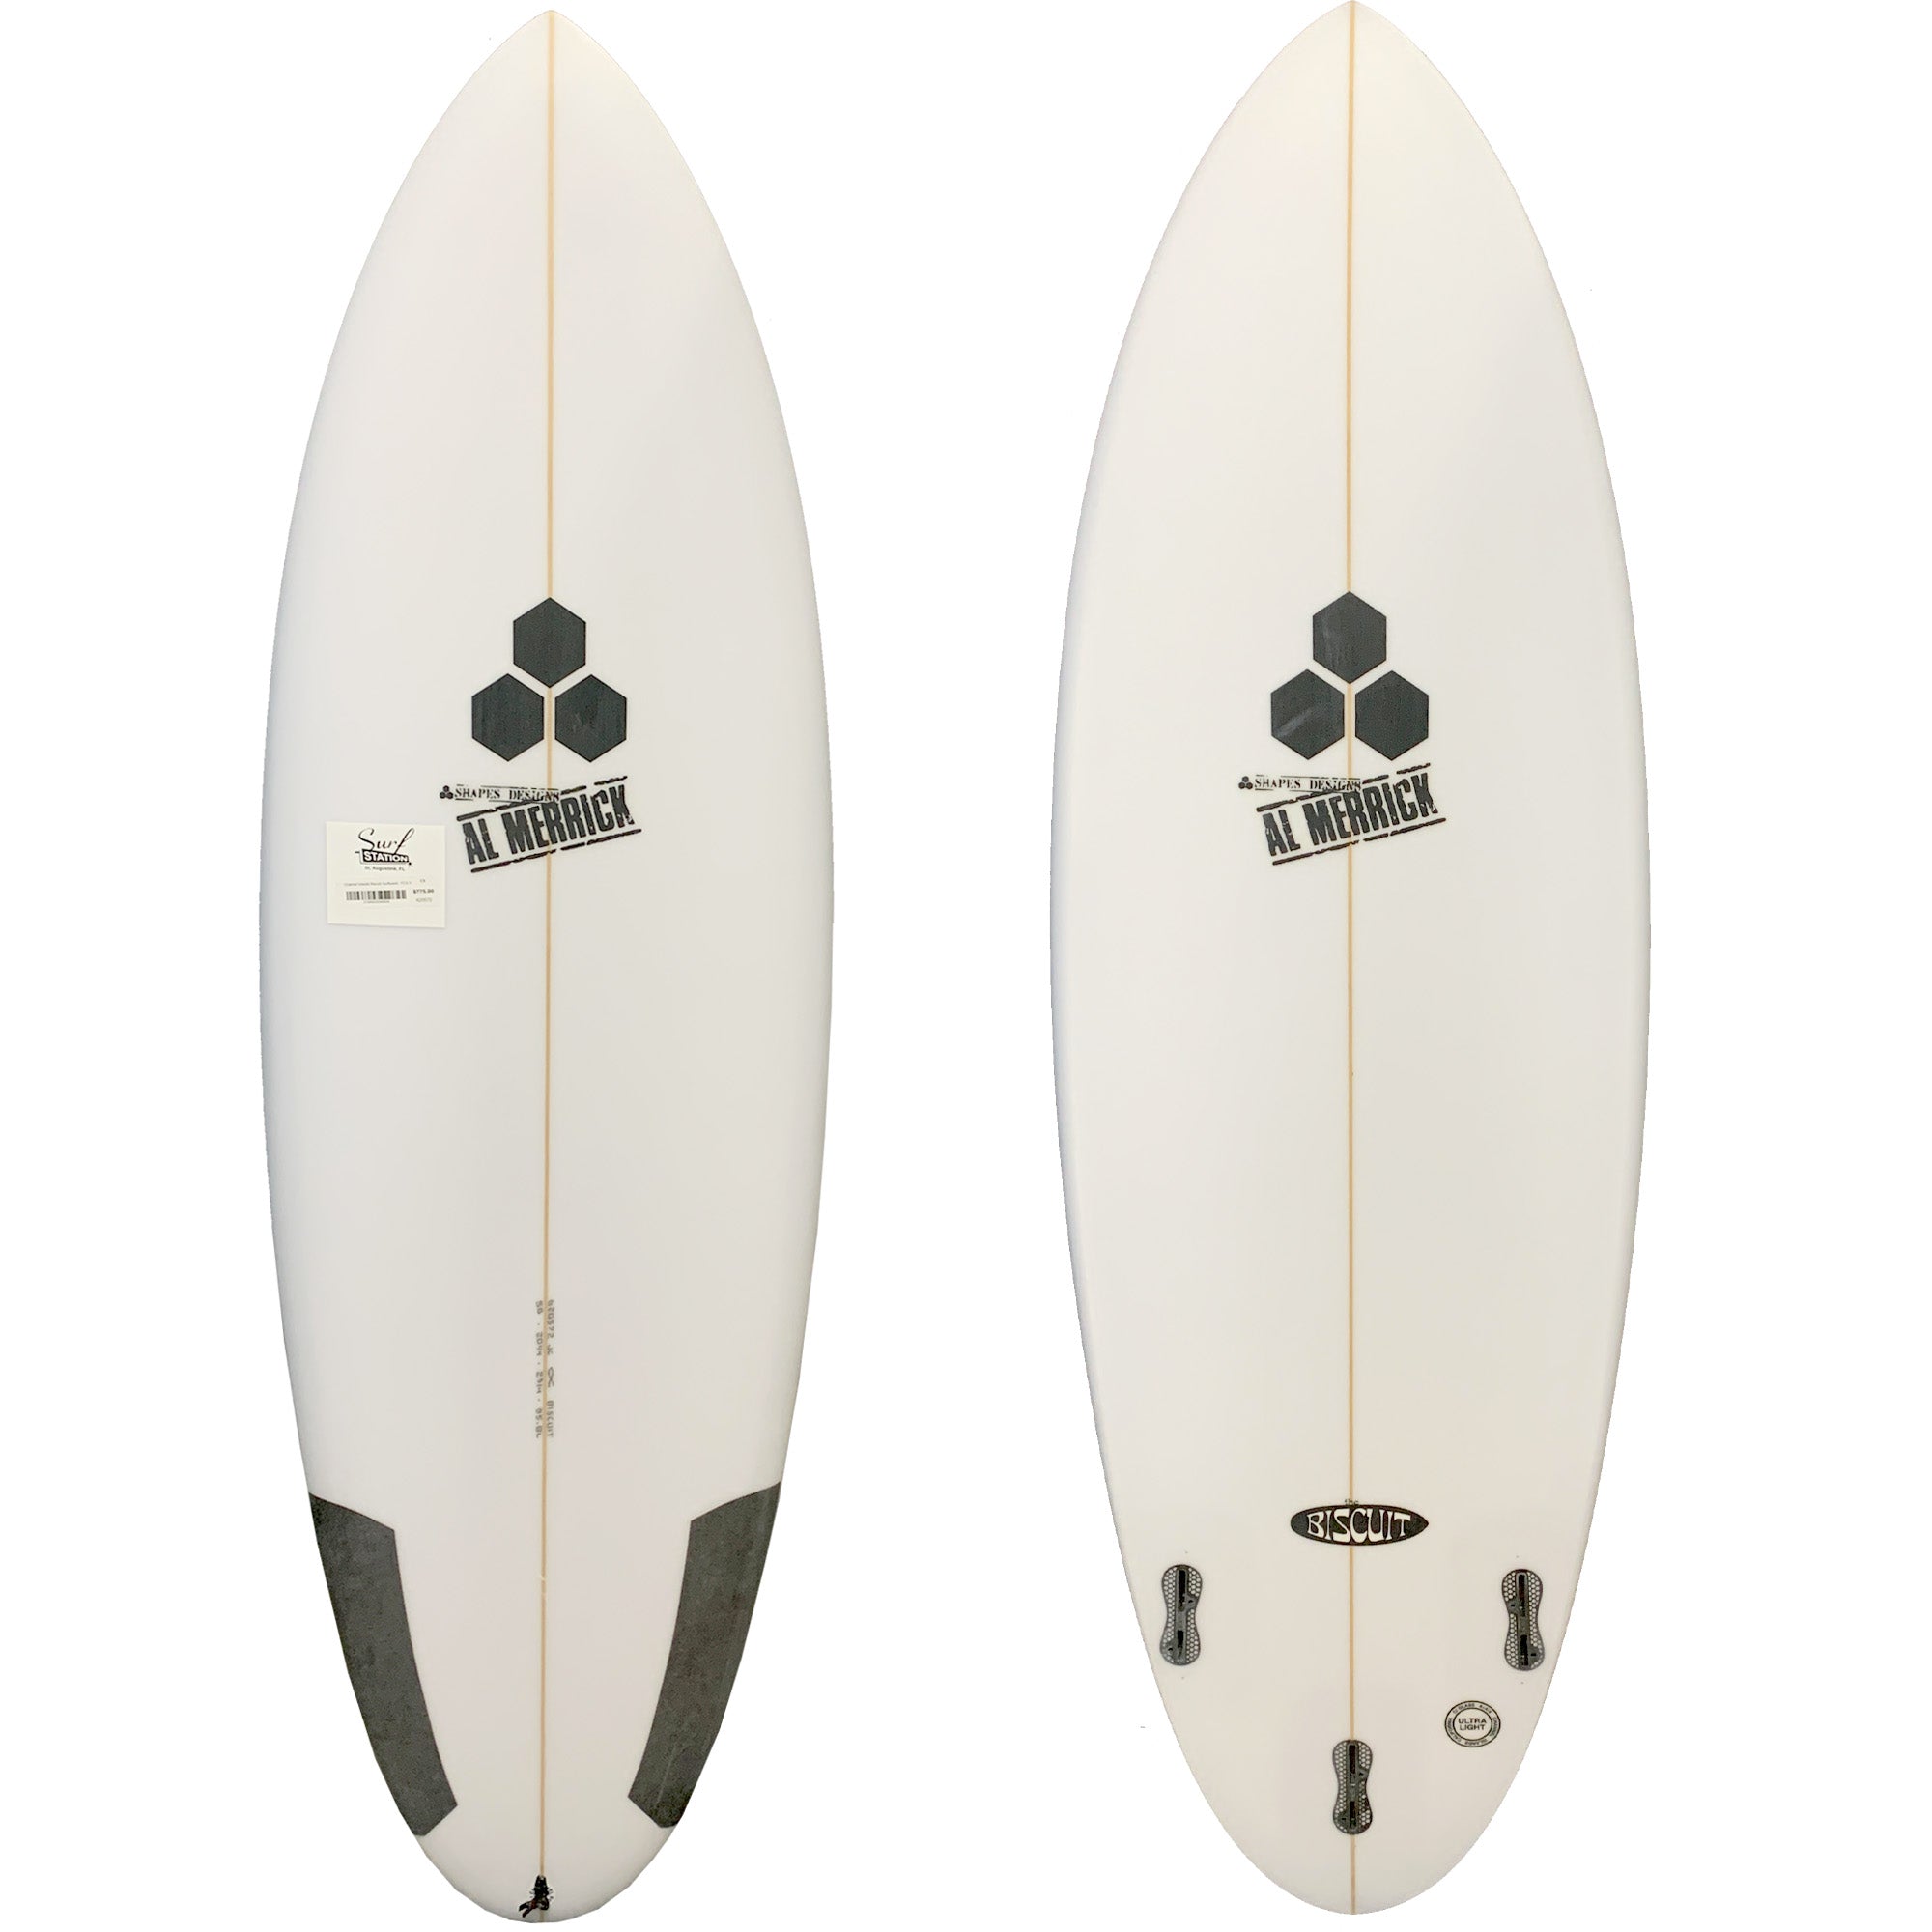 Channel Islands Biscuit Surfboard - FCS II